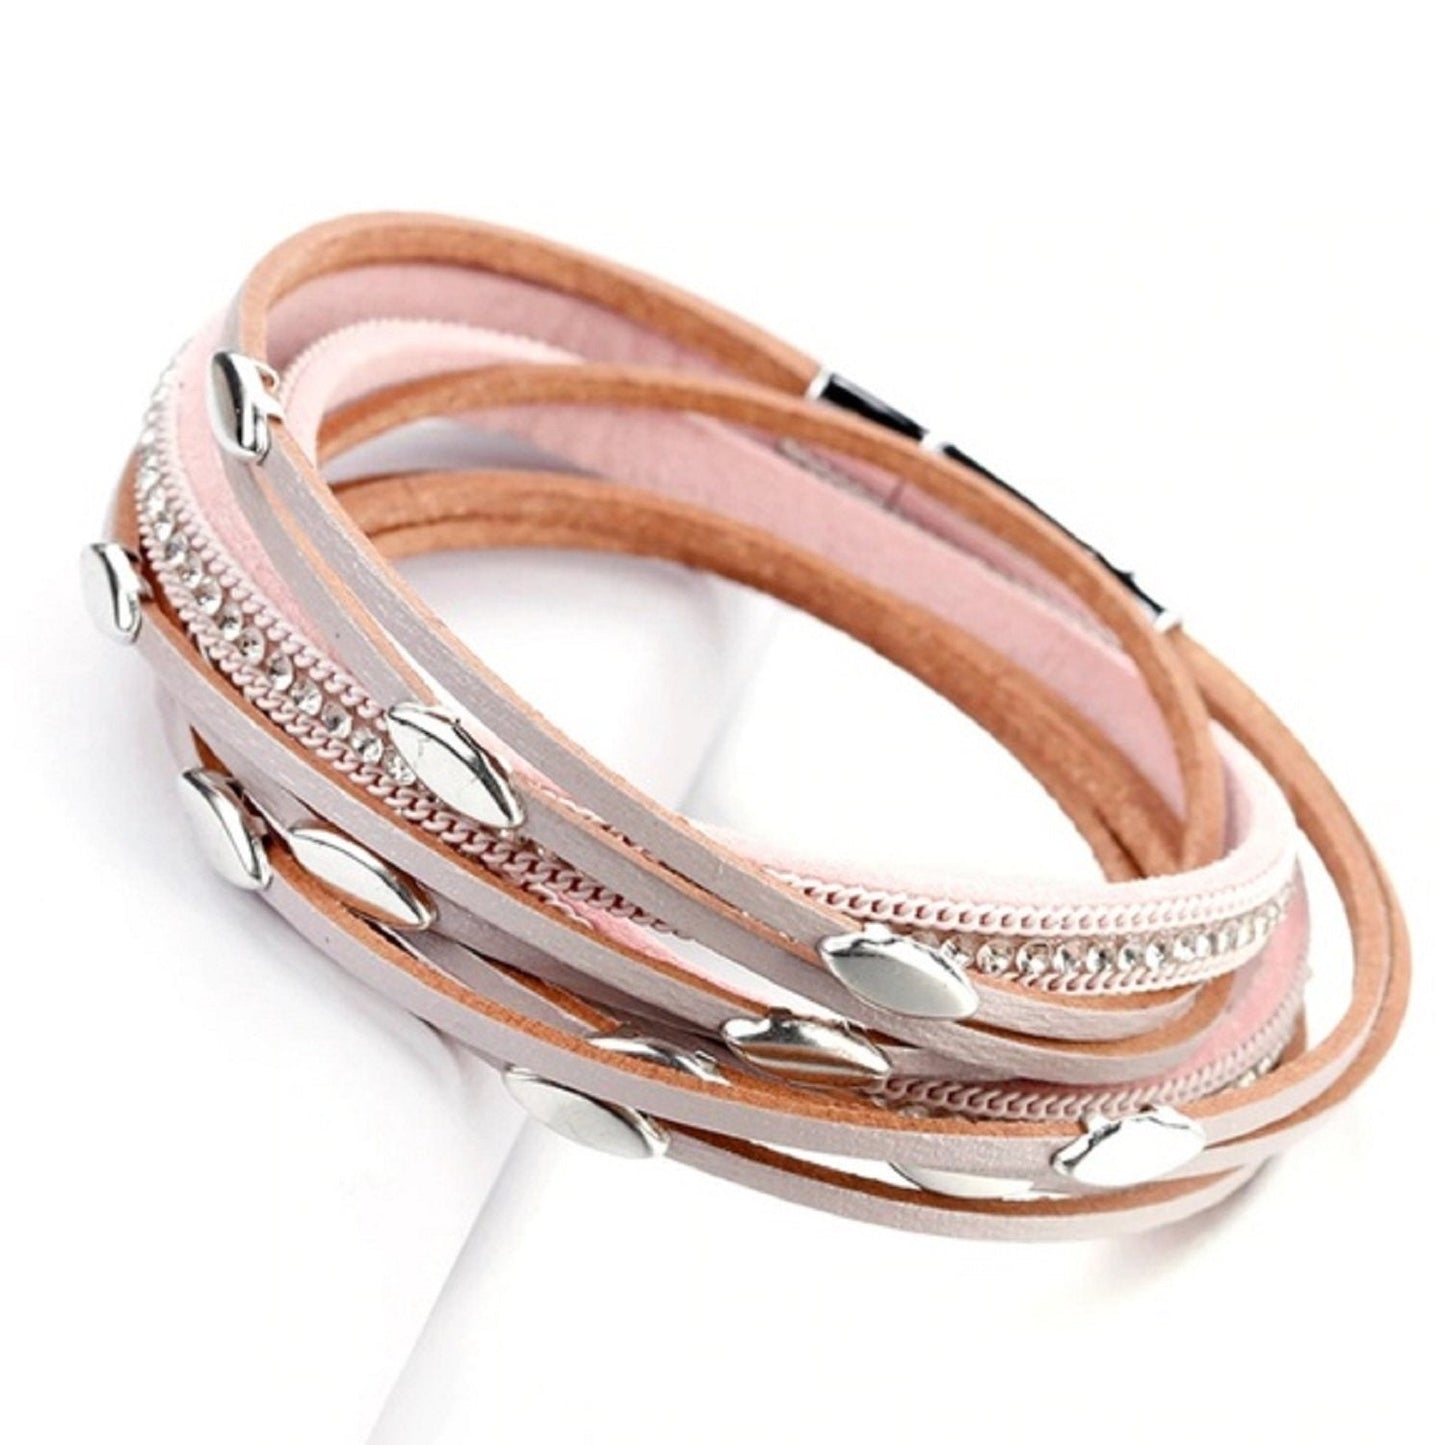 Bondi Pink Leather Bracelet